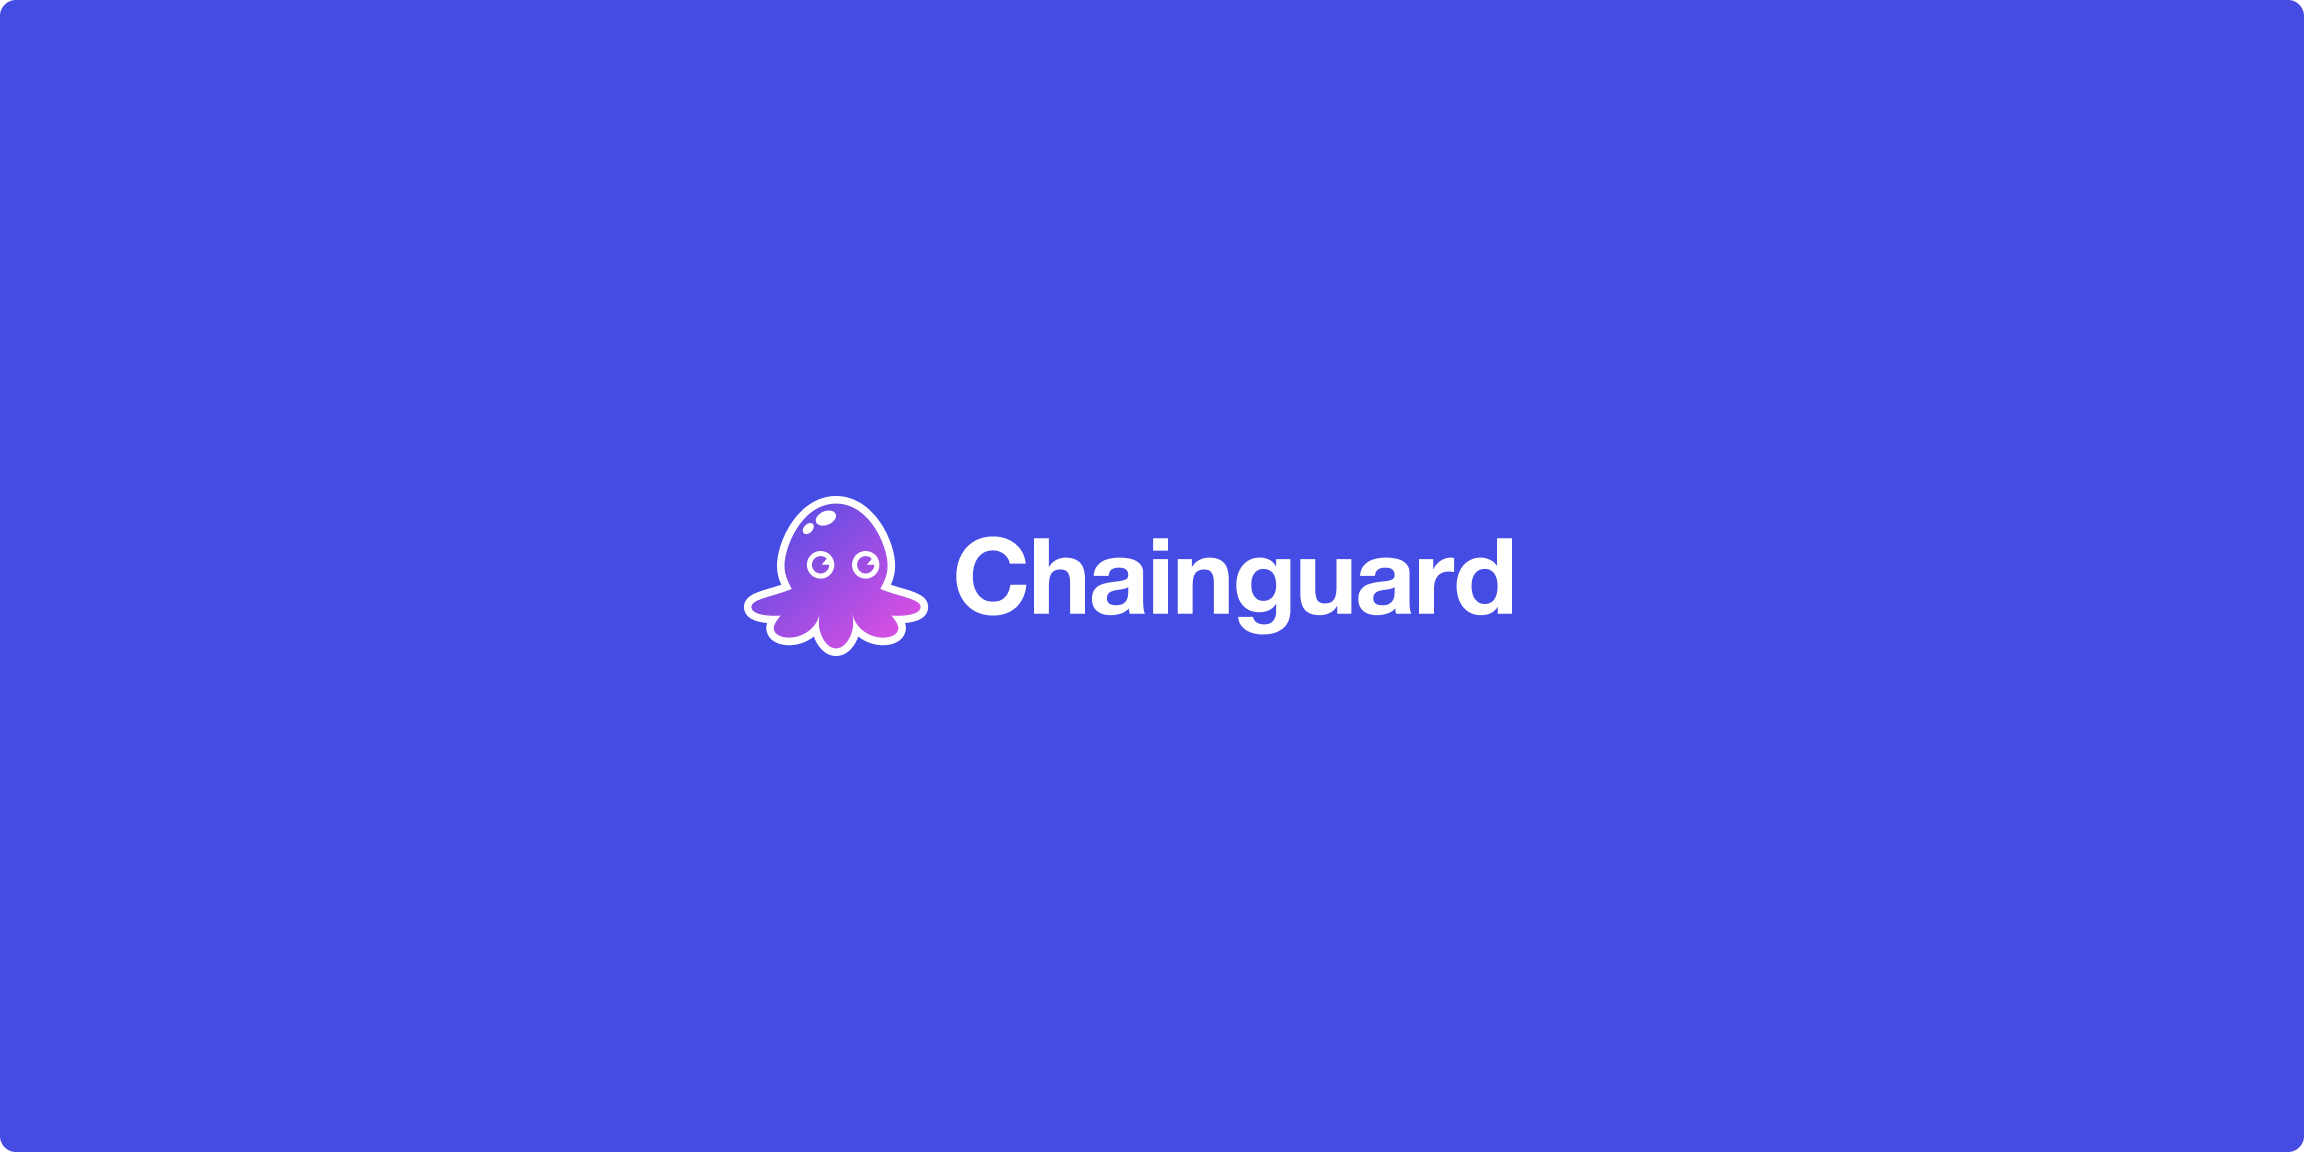 On adopting Chainguard Images